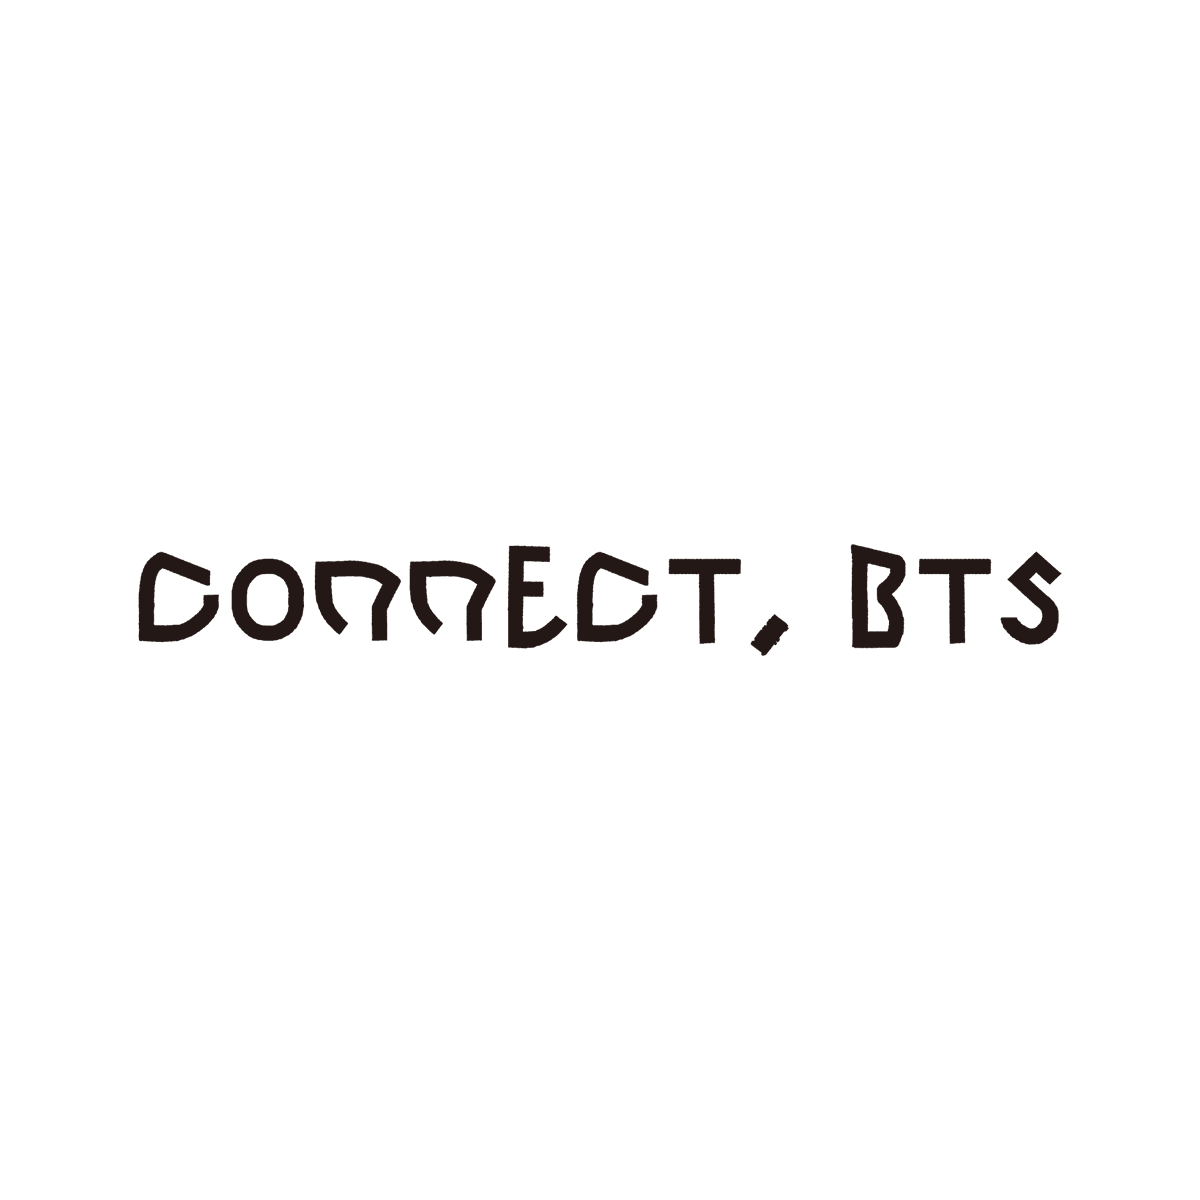 CONNECT, BTS 지금 시작합니다. connect-bts.com #LONDON #BERLIN #BUENOSAIRES #SEOUL #NEWYORKCITY #CONNECT_BTS